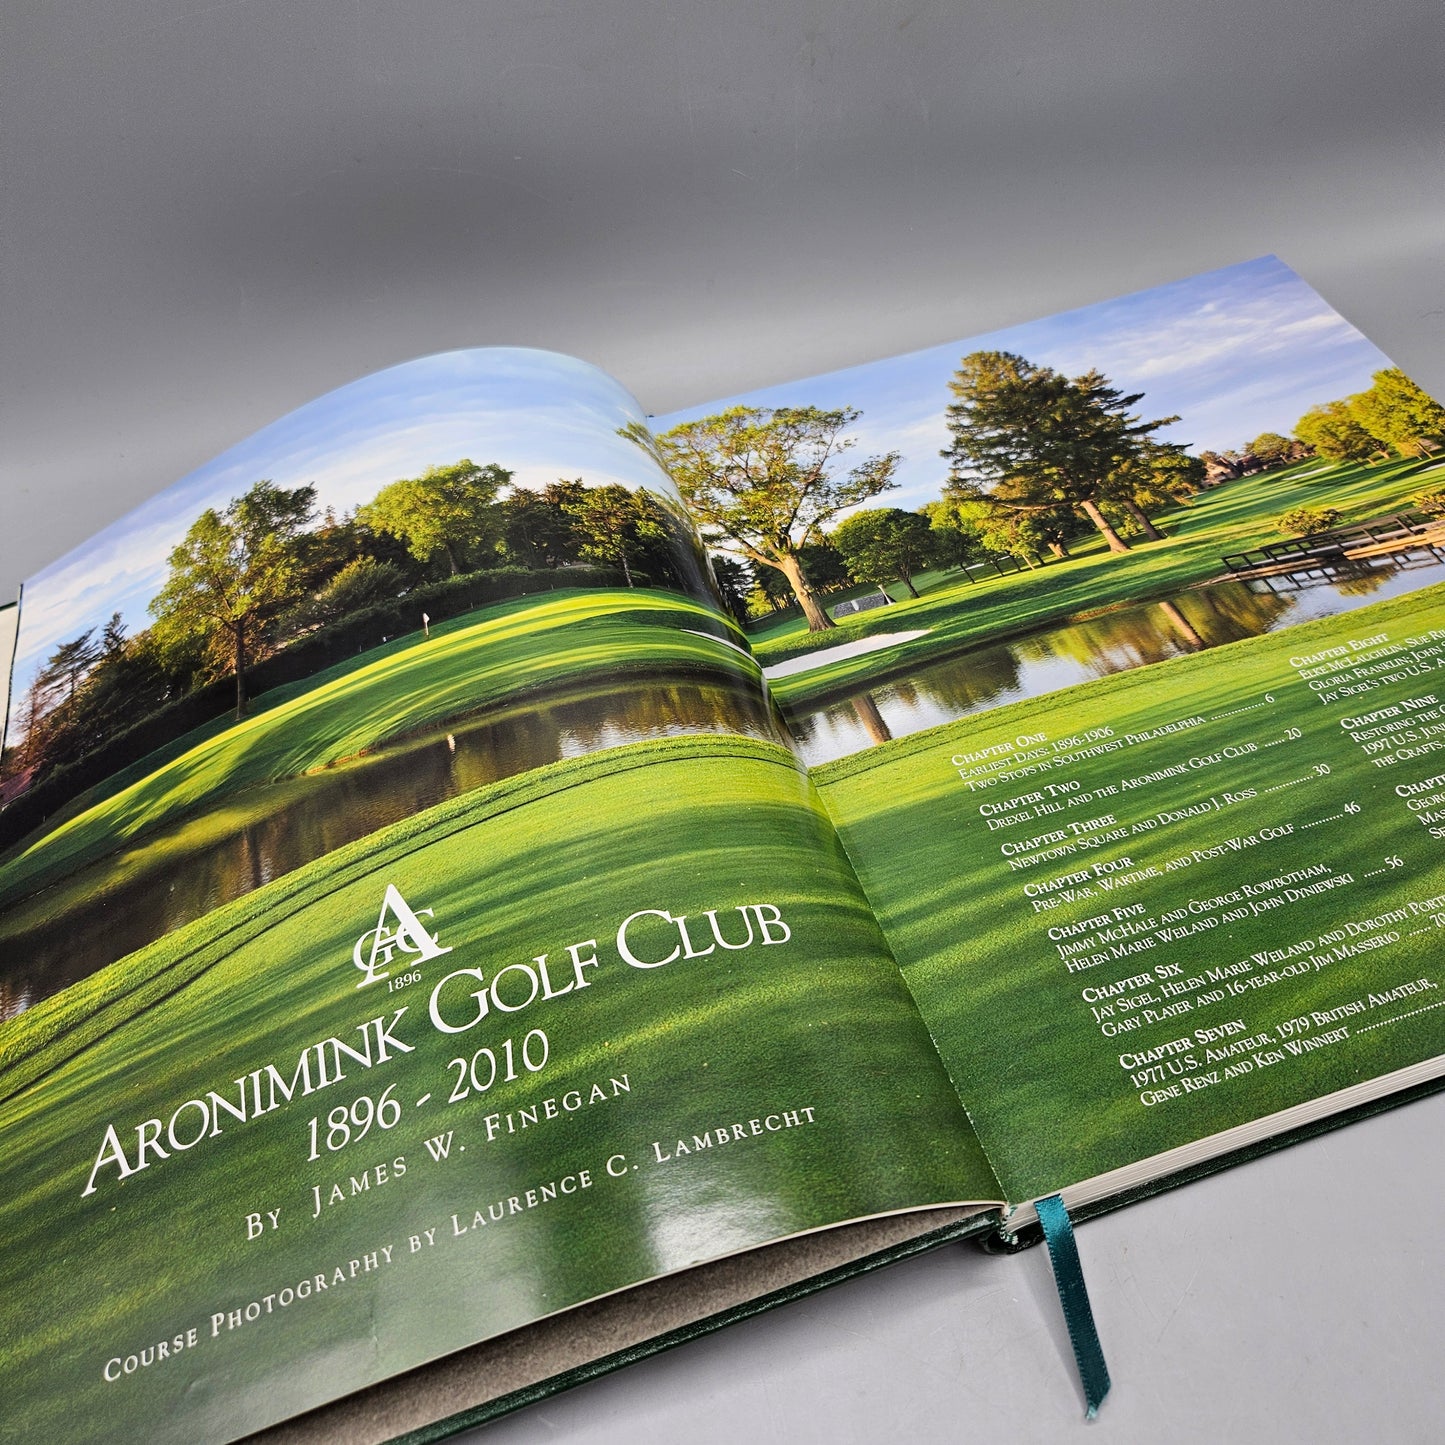 Book: Aronimink Golf Club 1896-2010 by James W. Finegan